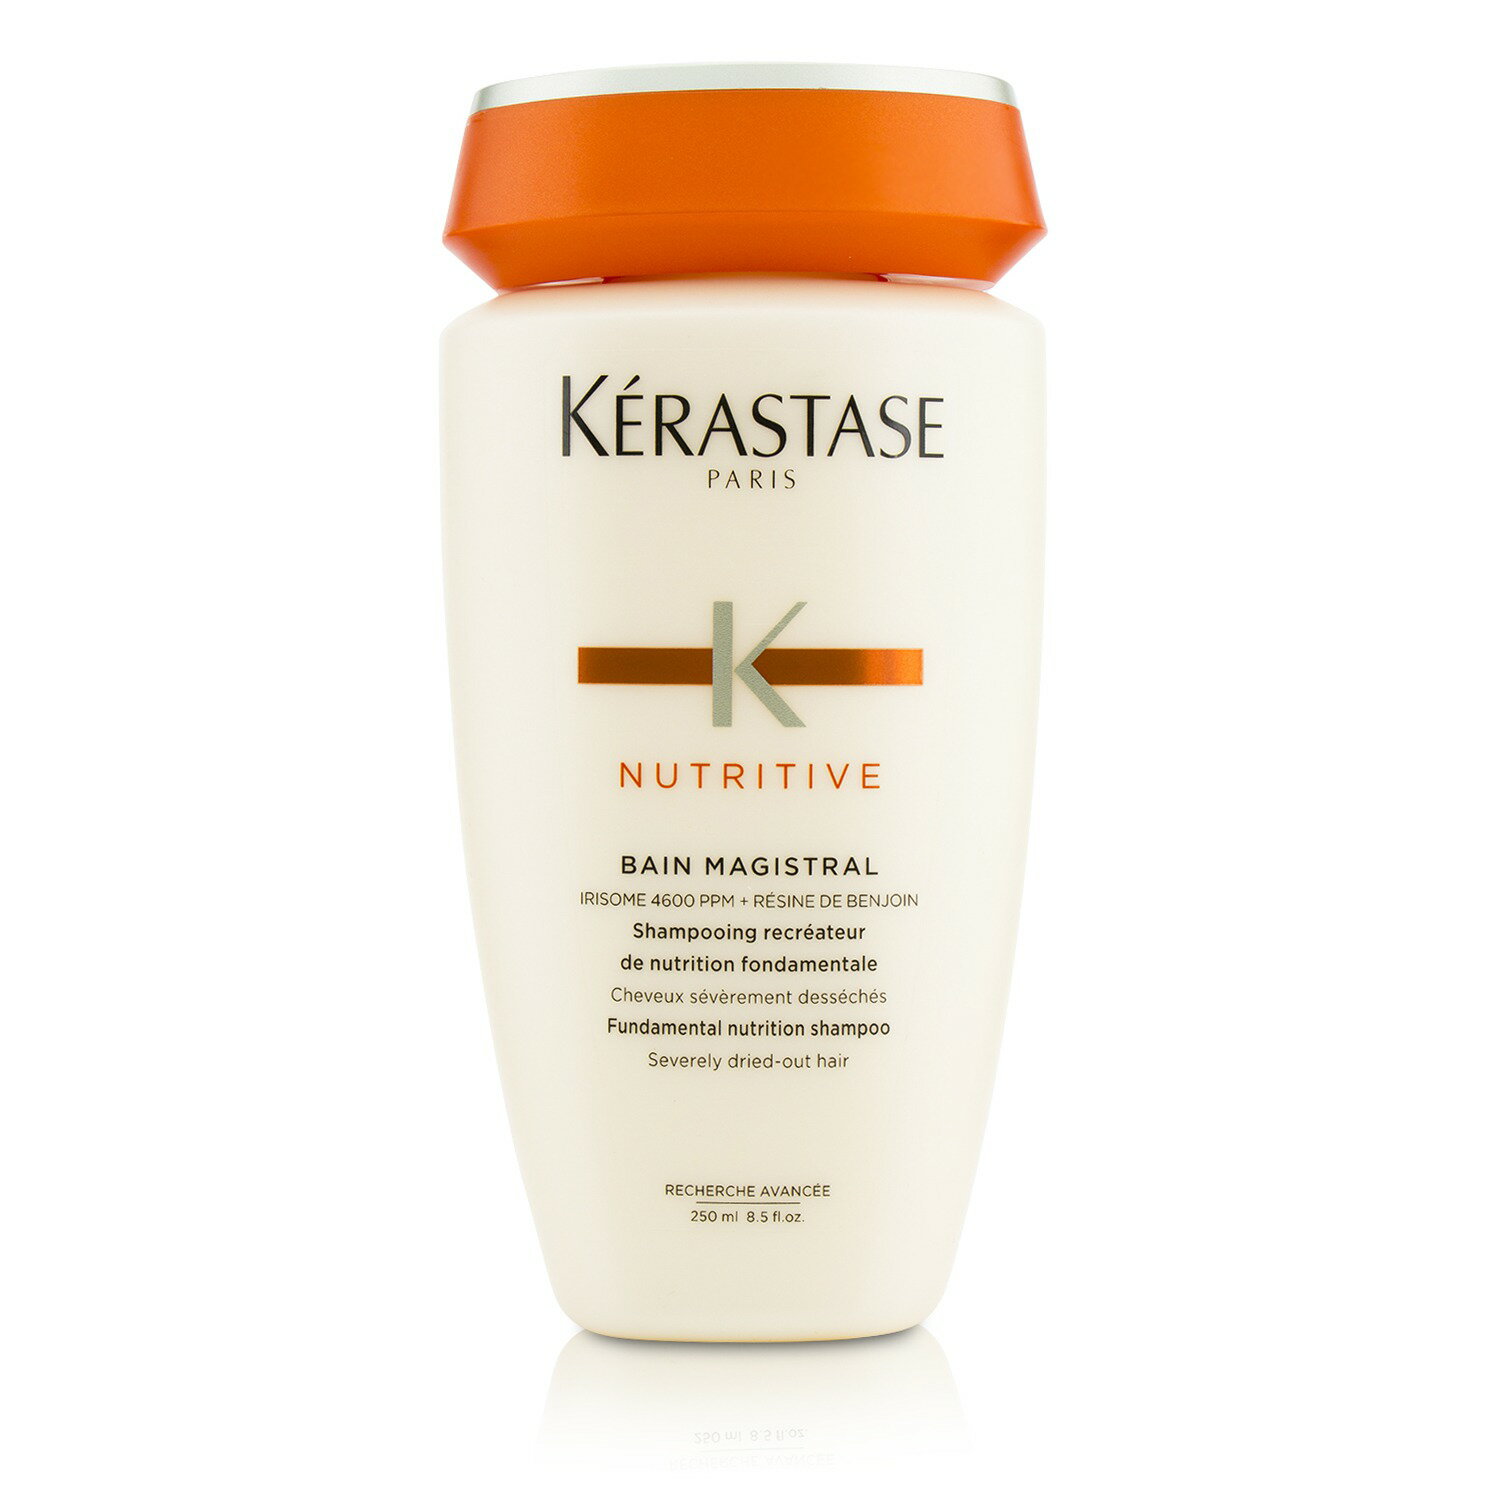 卡詩 Kerastase - 安息香滋養髮浴(適用於極度乾燥髮質) Nutritive Bain Magistral Fundamental Nutrition Shampoo